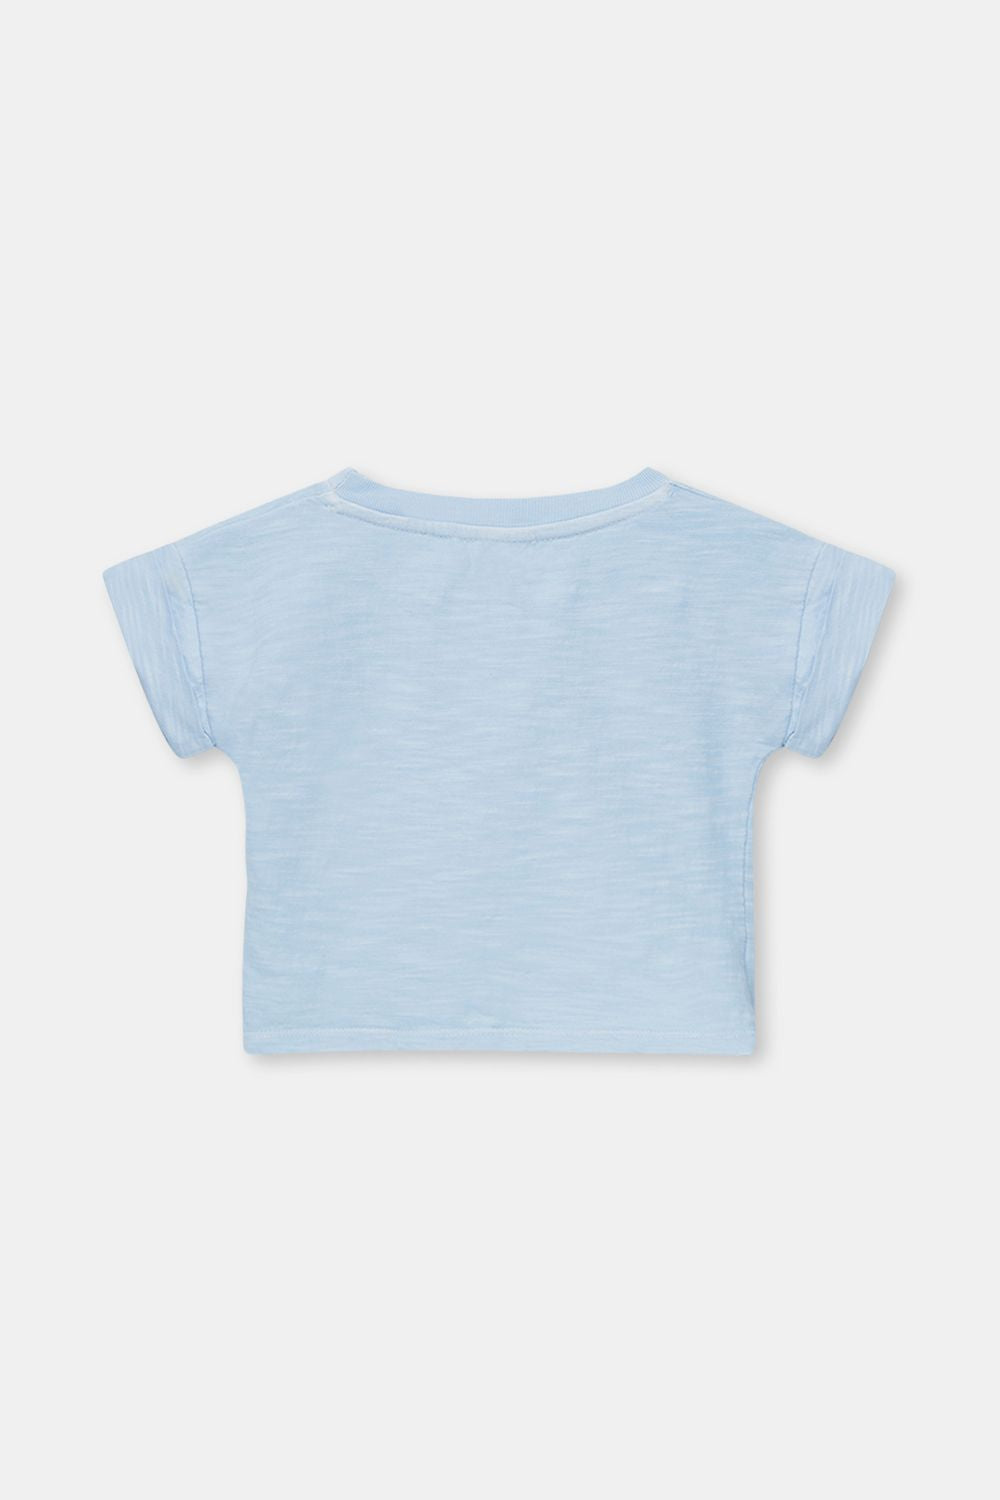 My Little cozmo - KIT205 - t-shirt - blue